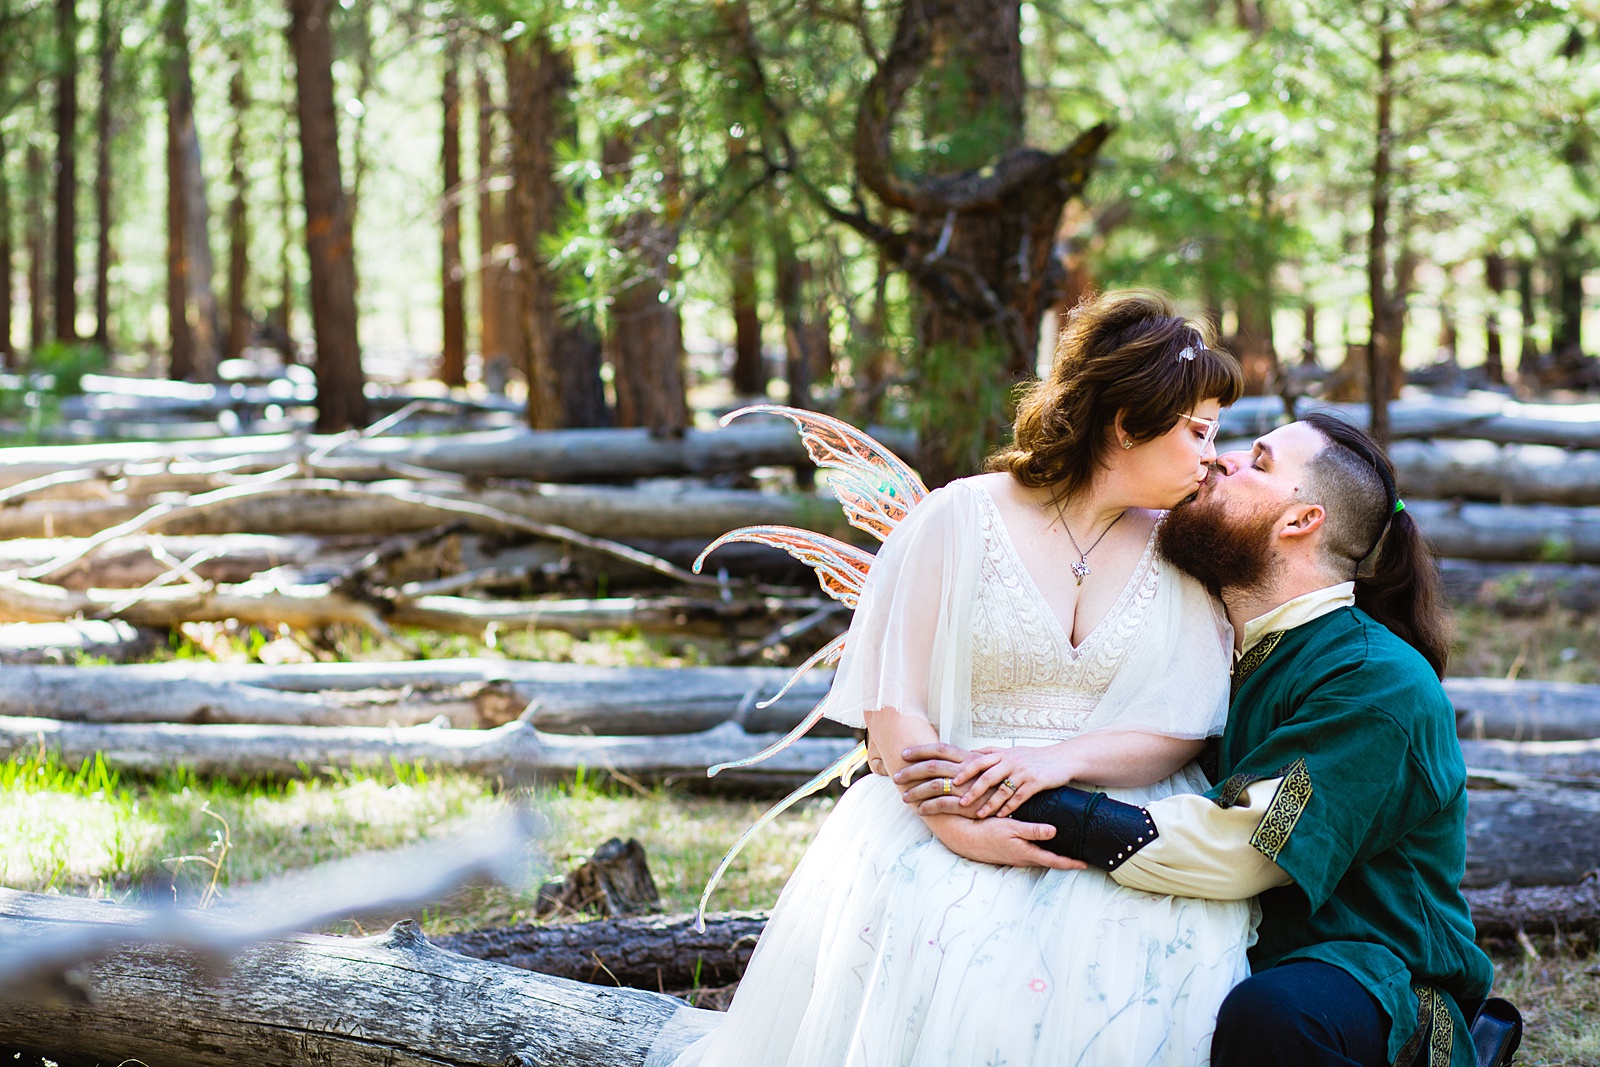 Newlyweds share a kiss during their Arizona Nordic Village wedding by Arizona wedding photographer PMA Photography.